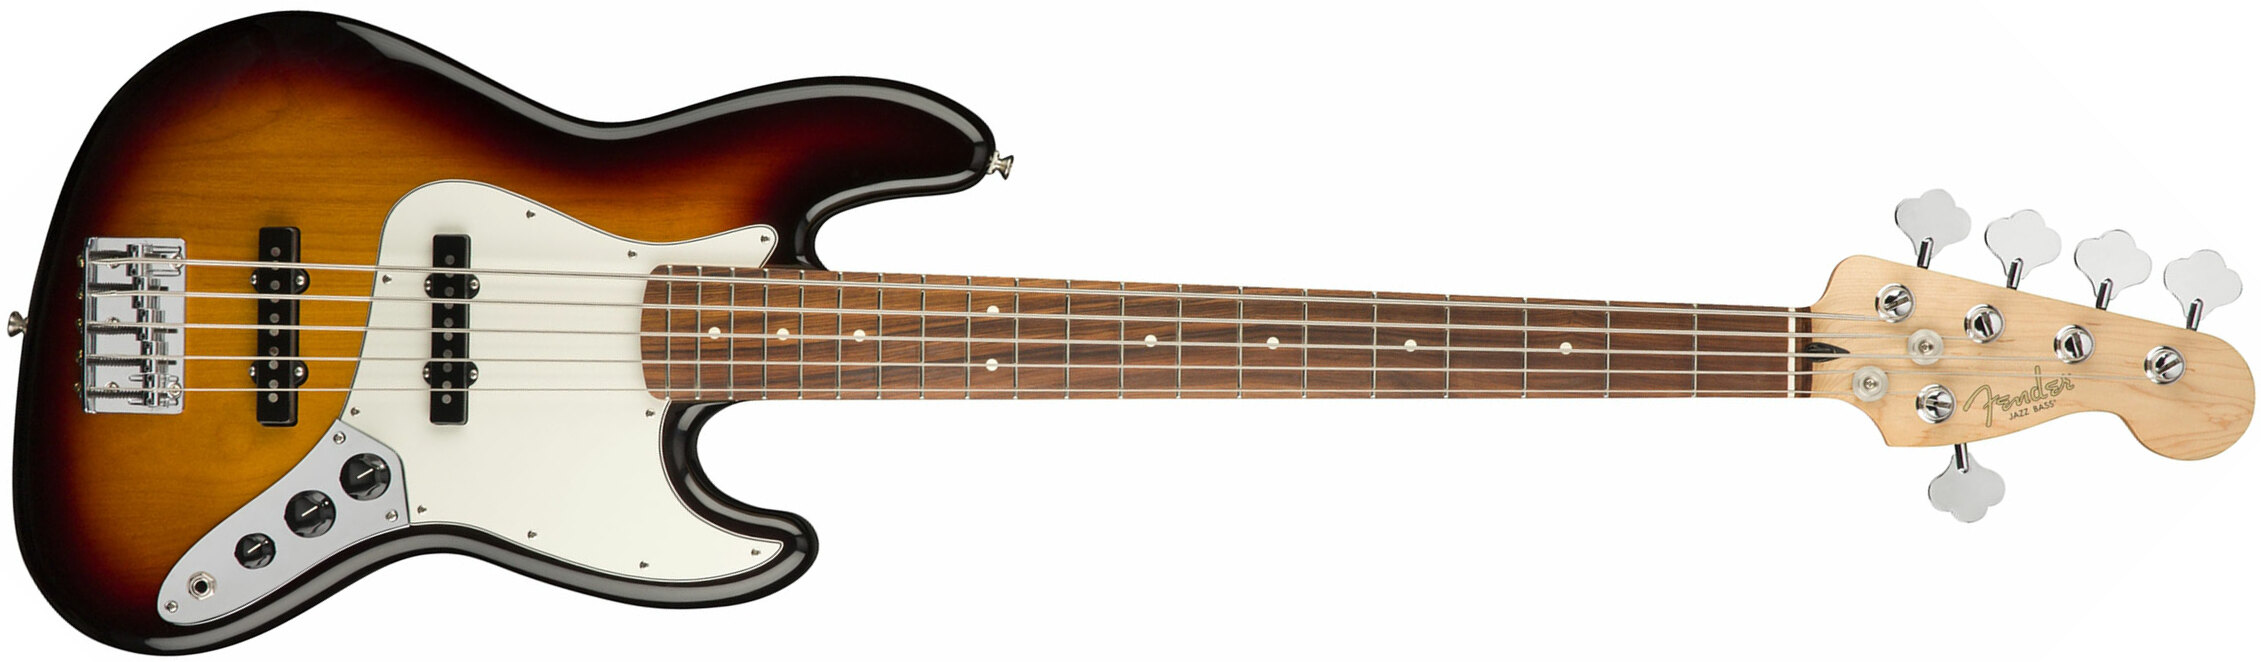 Fender Jazz Bass Player V 5-cordes Mex Pf - 3-color Sunburst - Bajo eléctrico de cuerpo sólido - Main picture